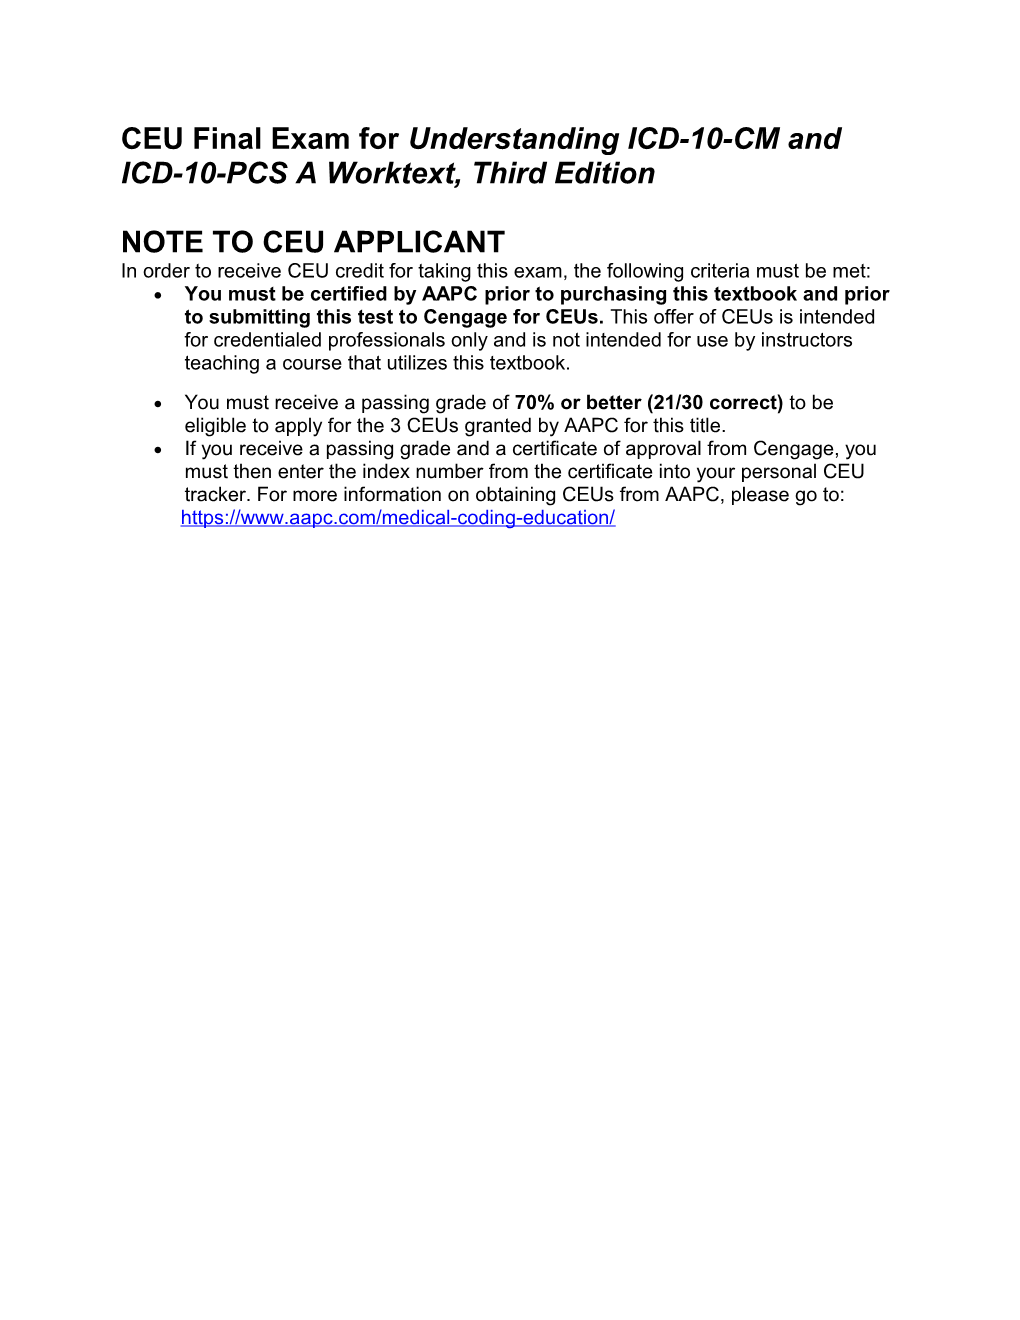 CEU Final Exam for Understanding ICD-10-CM and ICD-10-PCS a Worktext, Third Edition